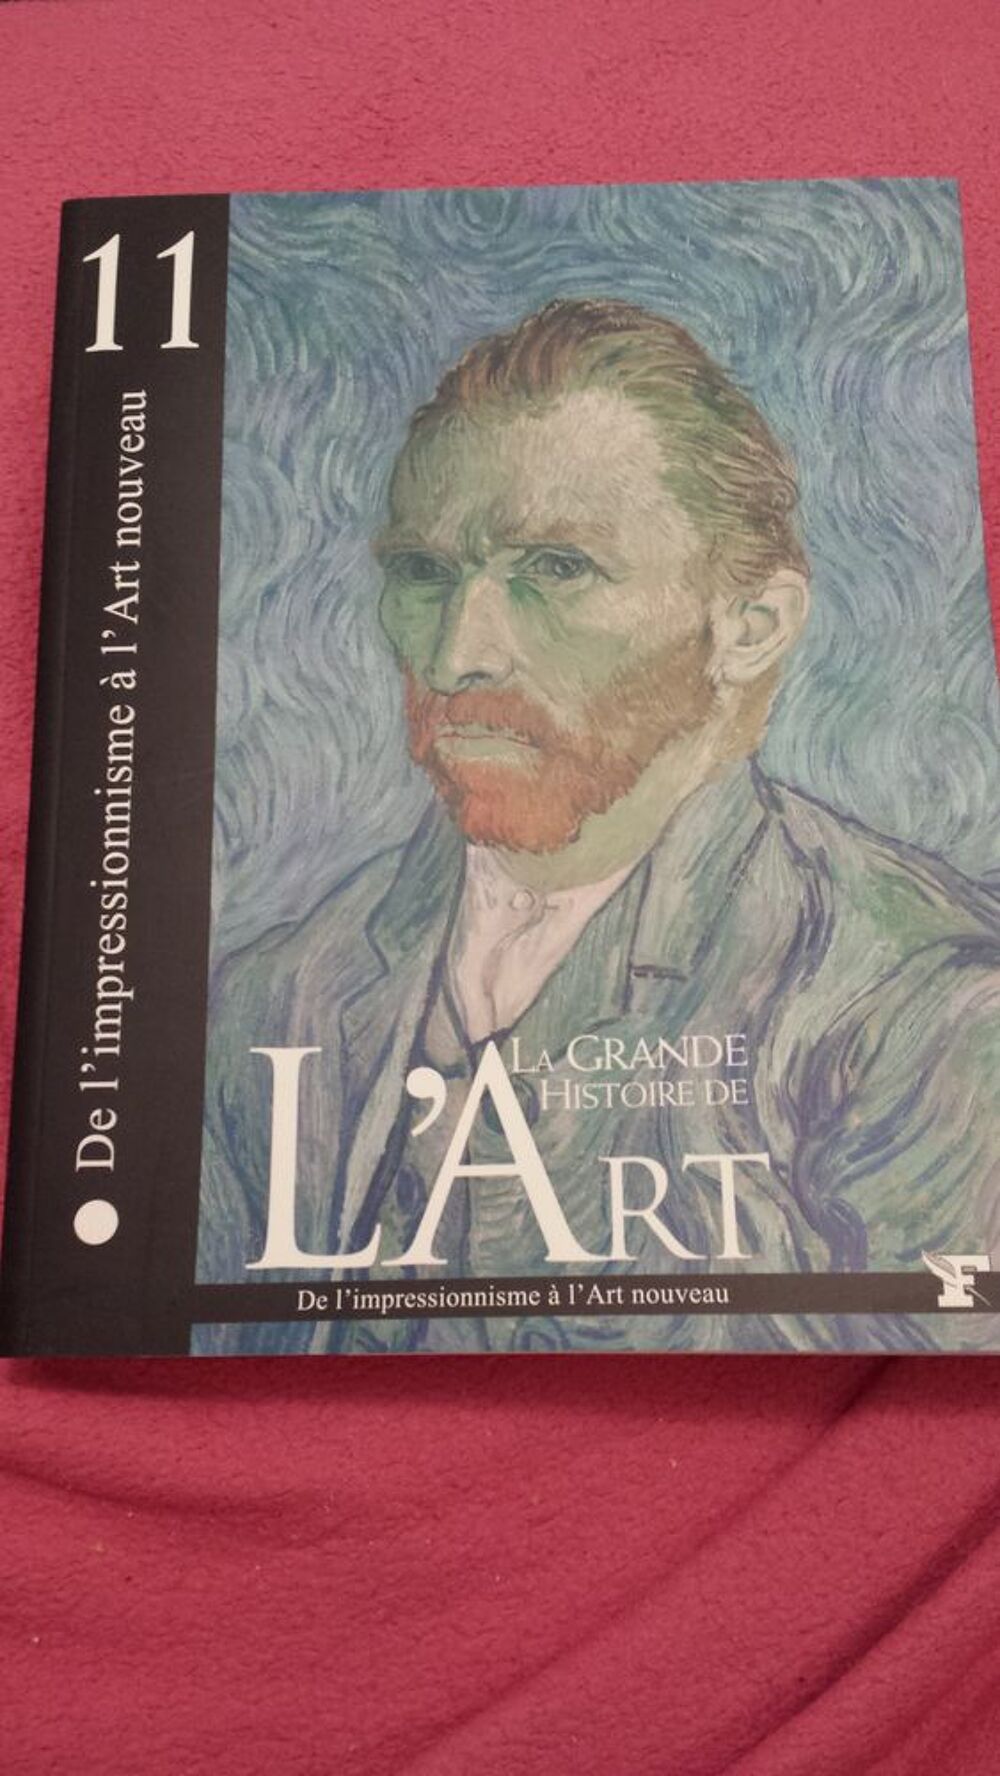 LIVRE LA GRANDE HISTOIRE DE L'ART No 11 Livres et BD